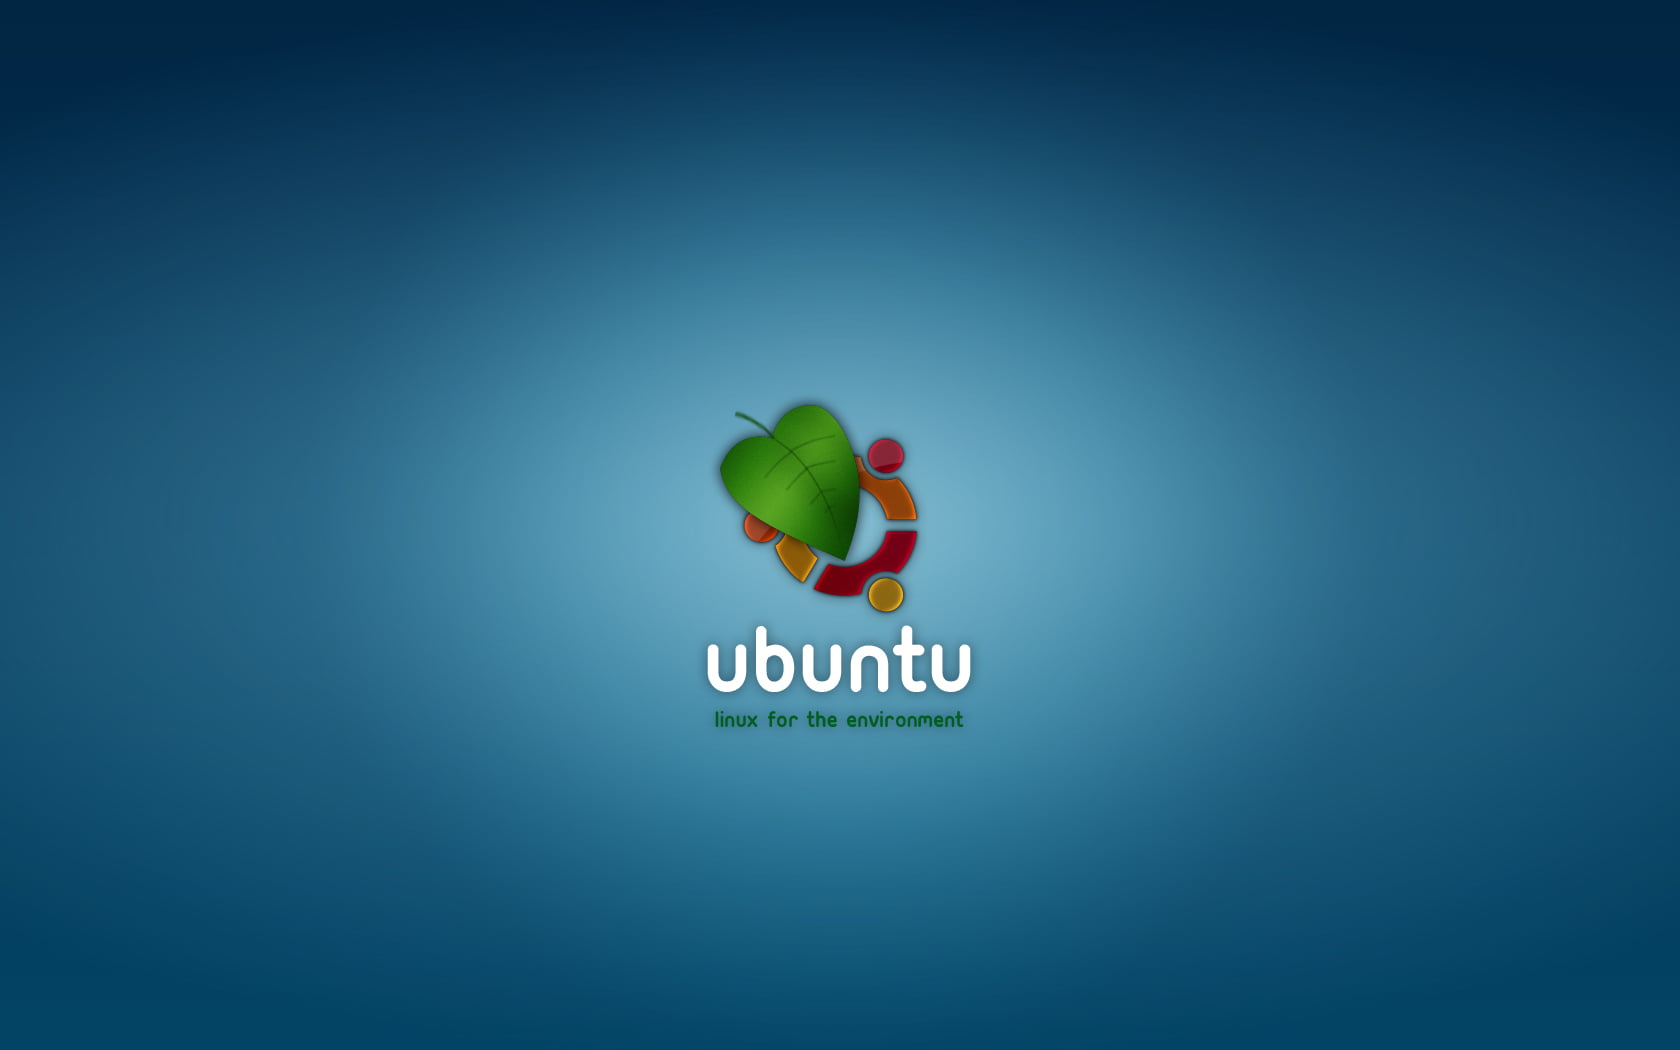 Ubuntu Green Leave, Ubuntu vector art, Computers, Linux, linux ubuntu